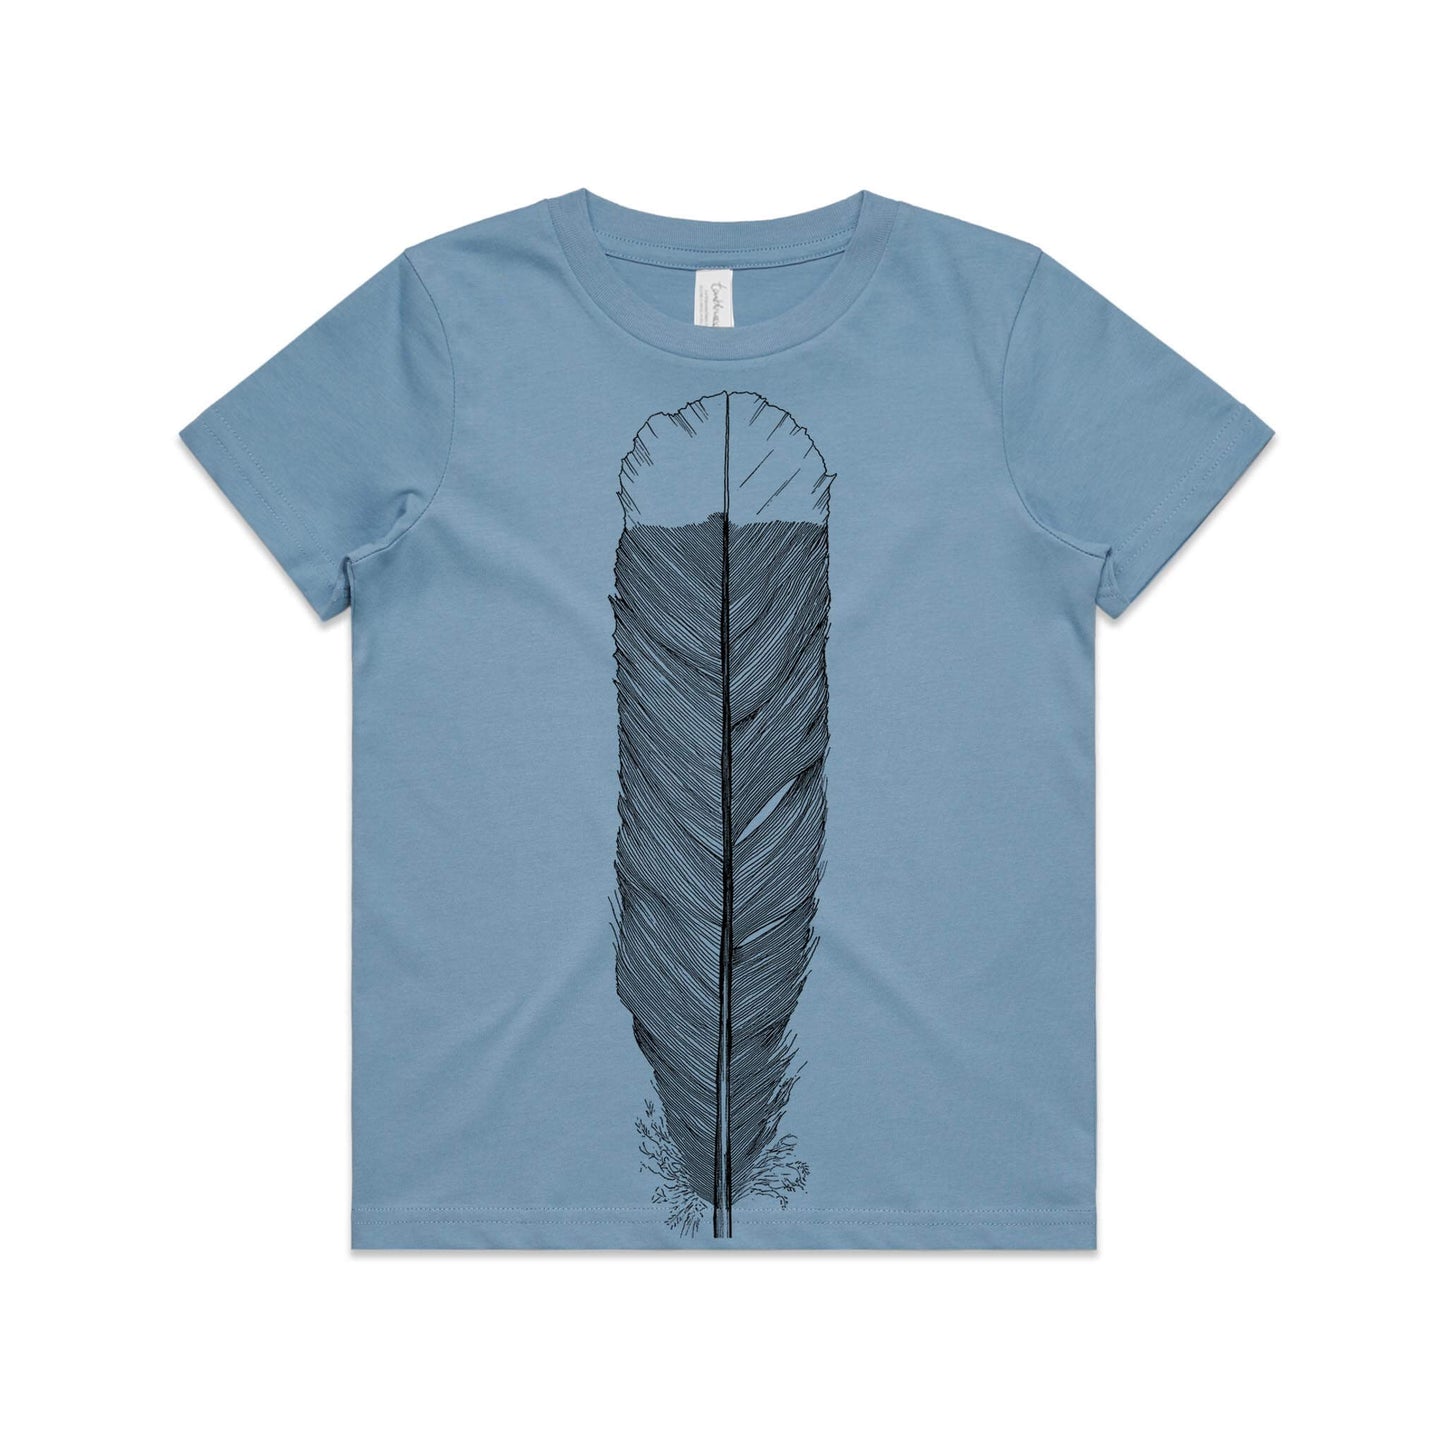 Huia Feather Kids' t-shirt